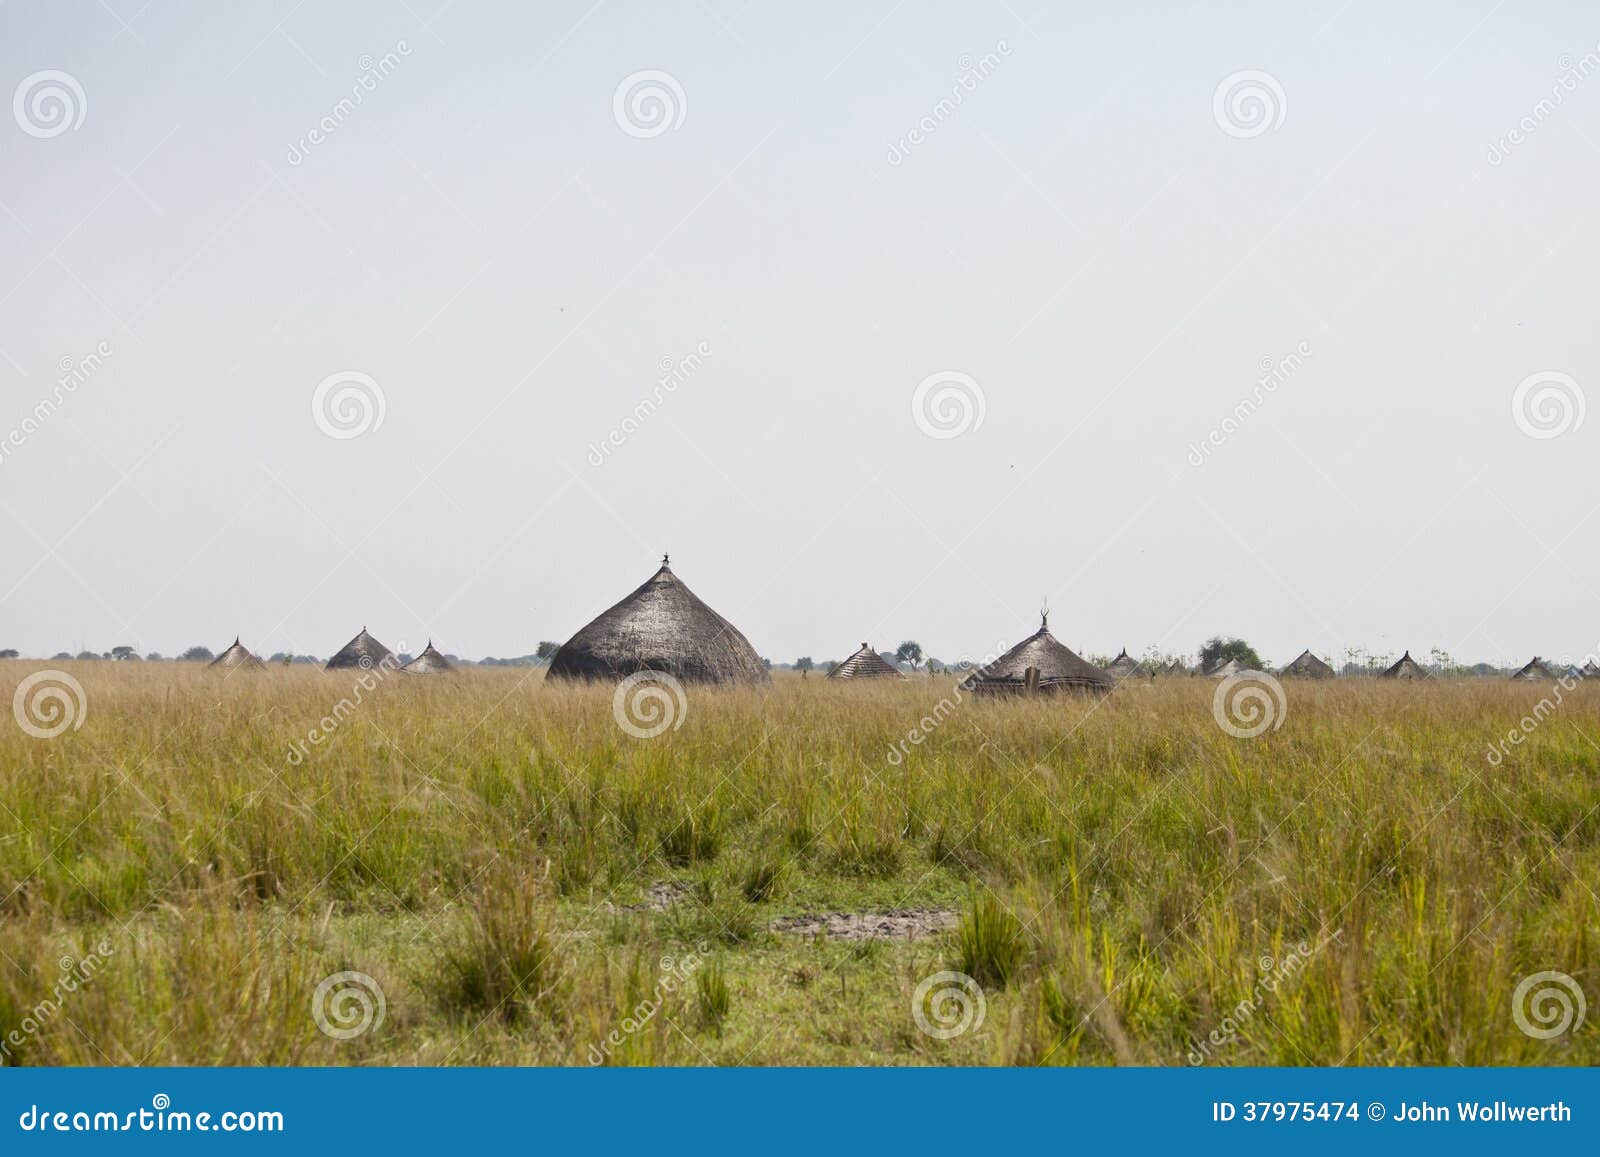 village in south sudan